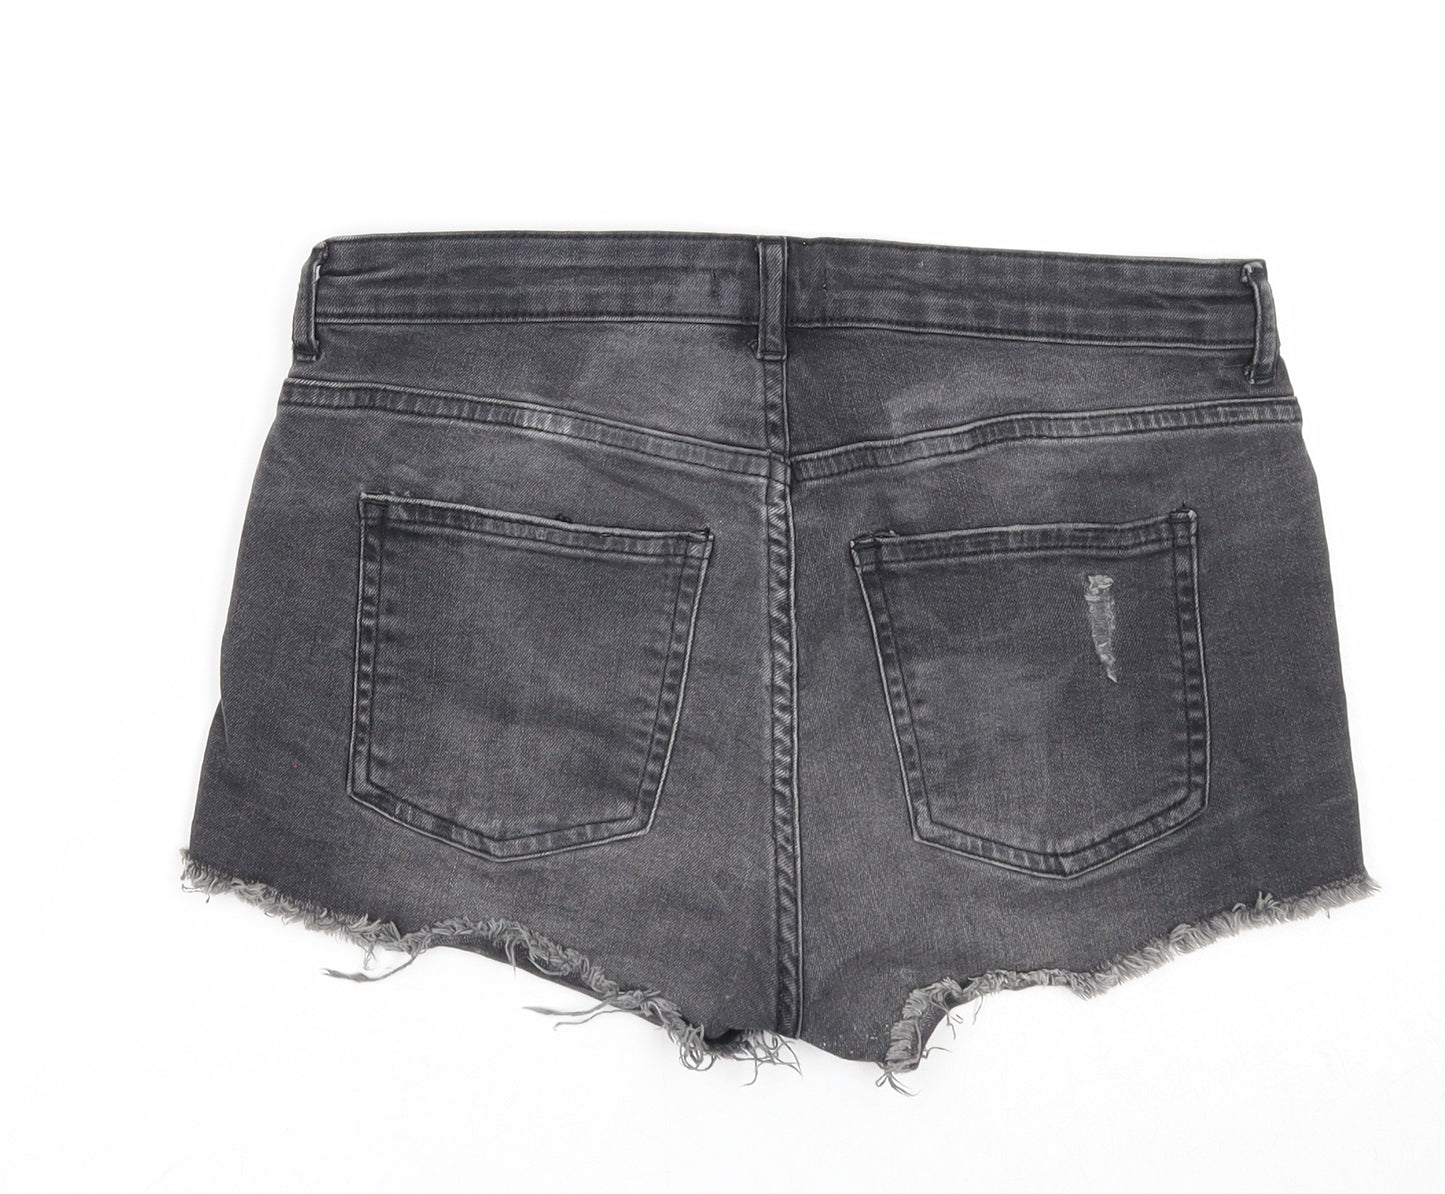 H&M Womens Grey Cotton Cut-Off Shorts Size 8 Regular Zip - Distressed